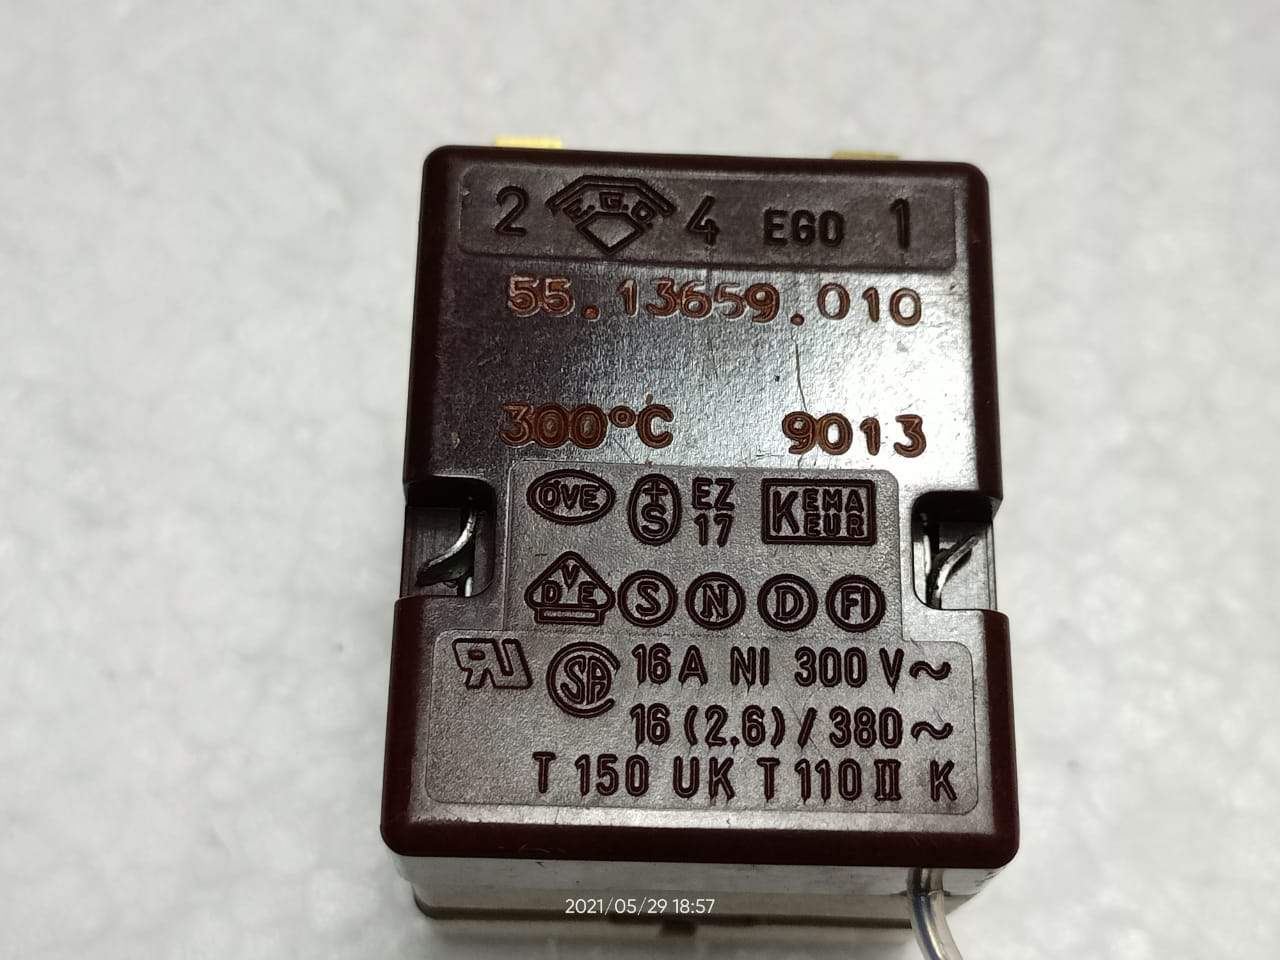 EGO 55.13659.010 Thermostat